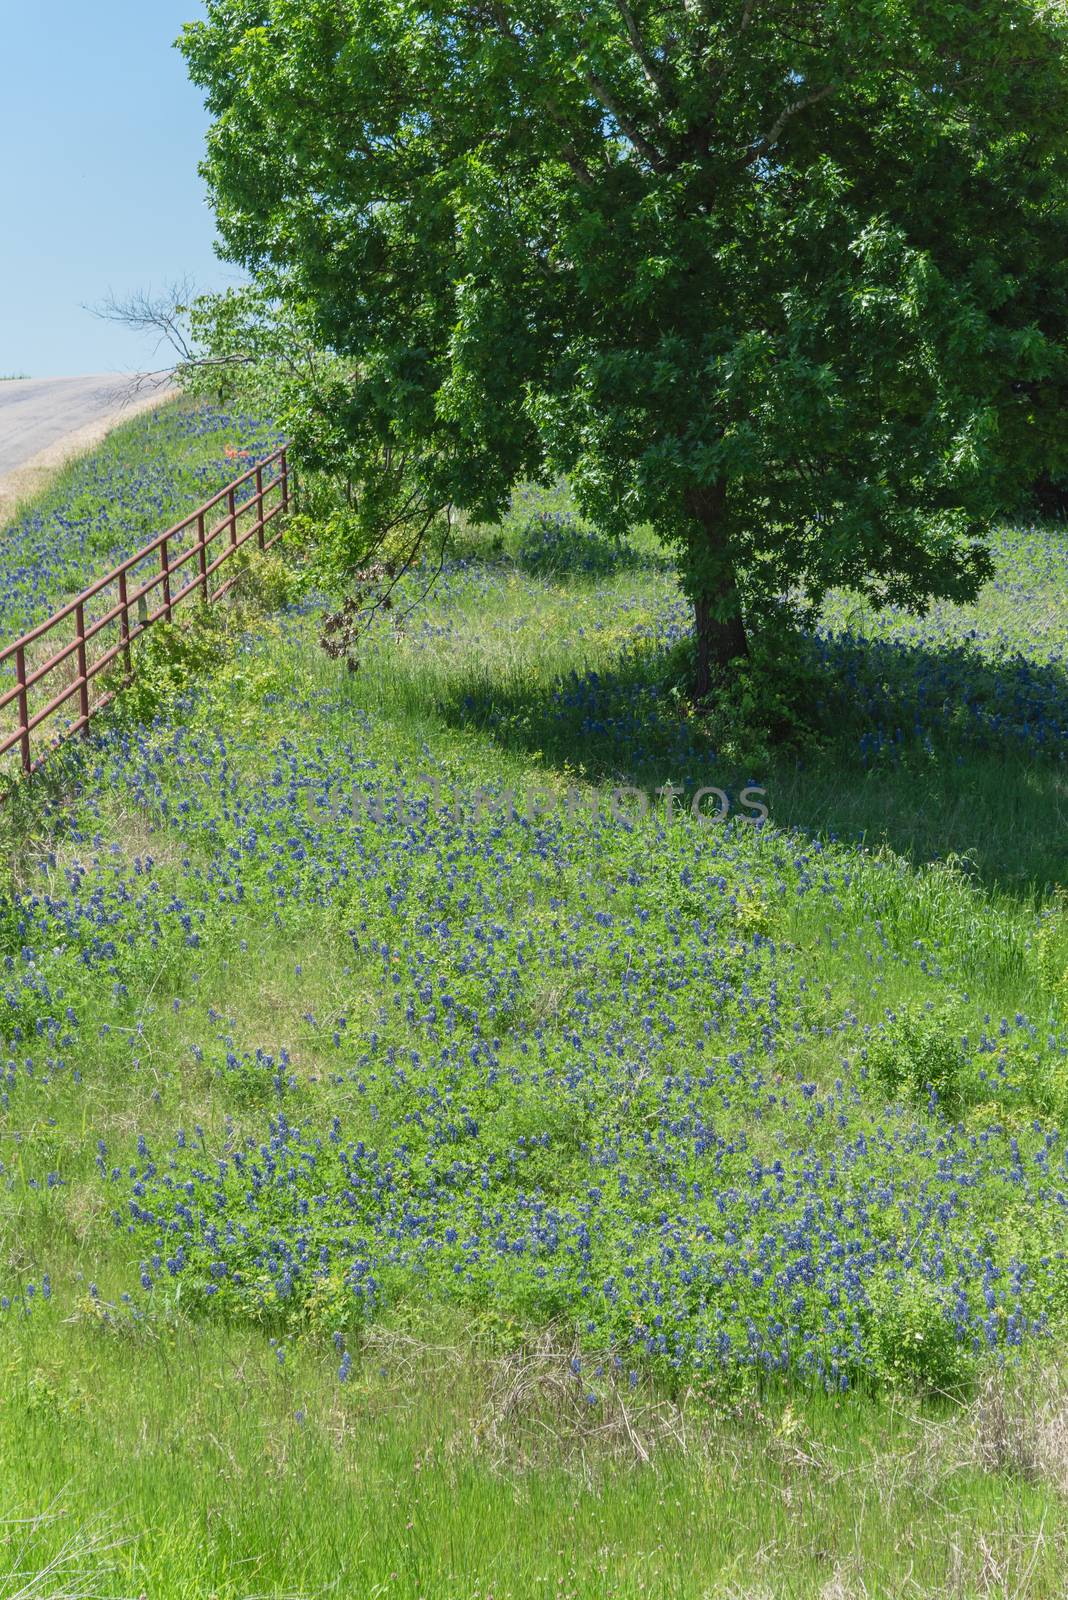 Blossom Bluebonnet in rural landscape of Texas countryside by trongnguyen